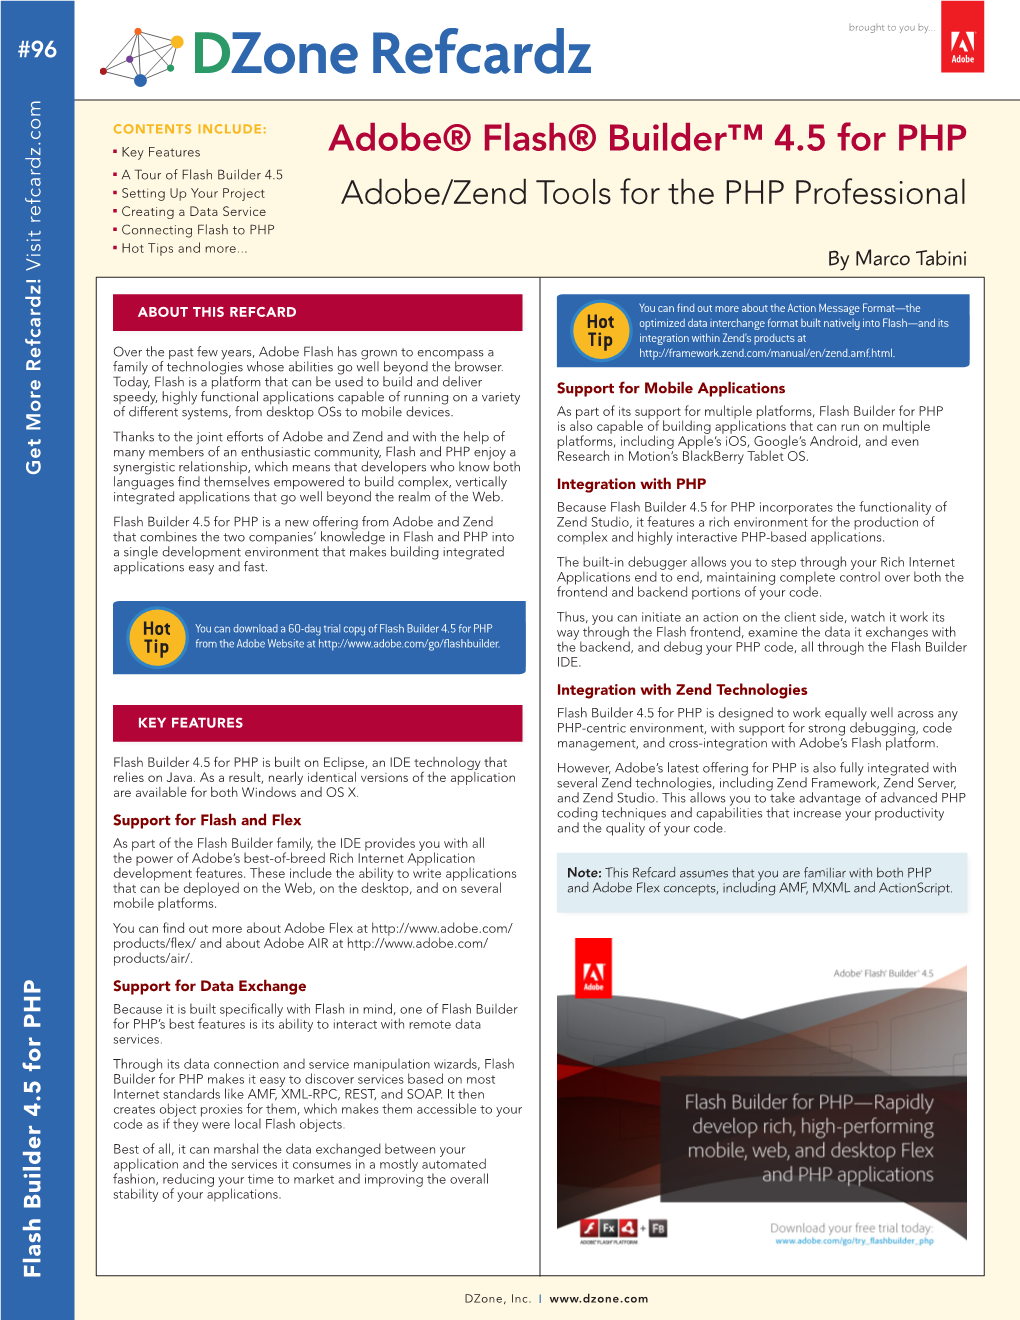 Adobe® Flash® Builder™ 4.5 for PHP